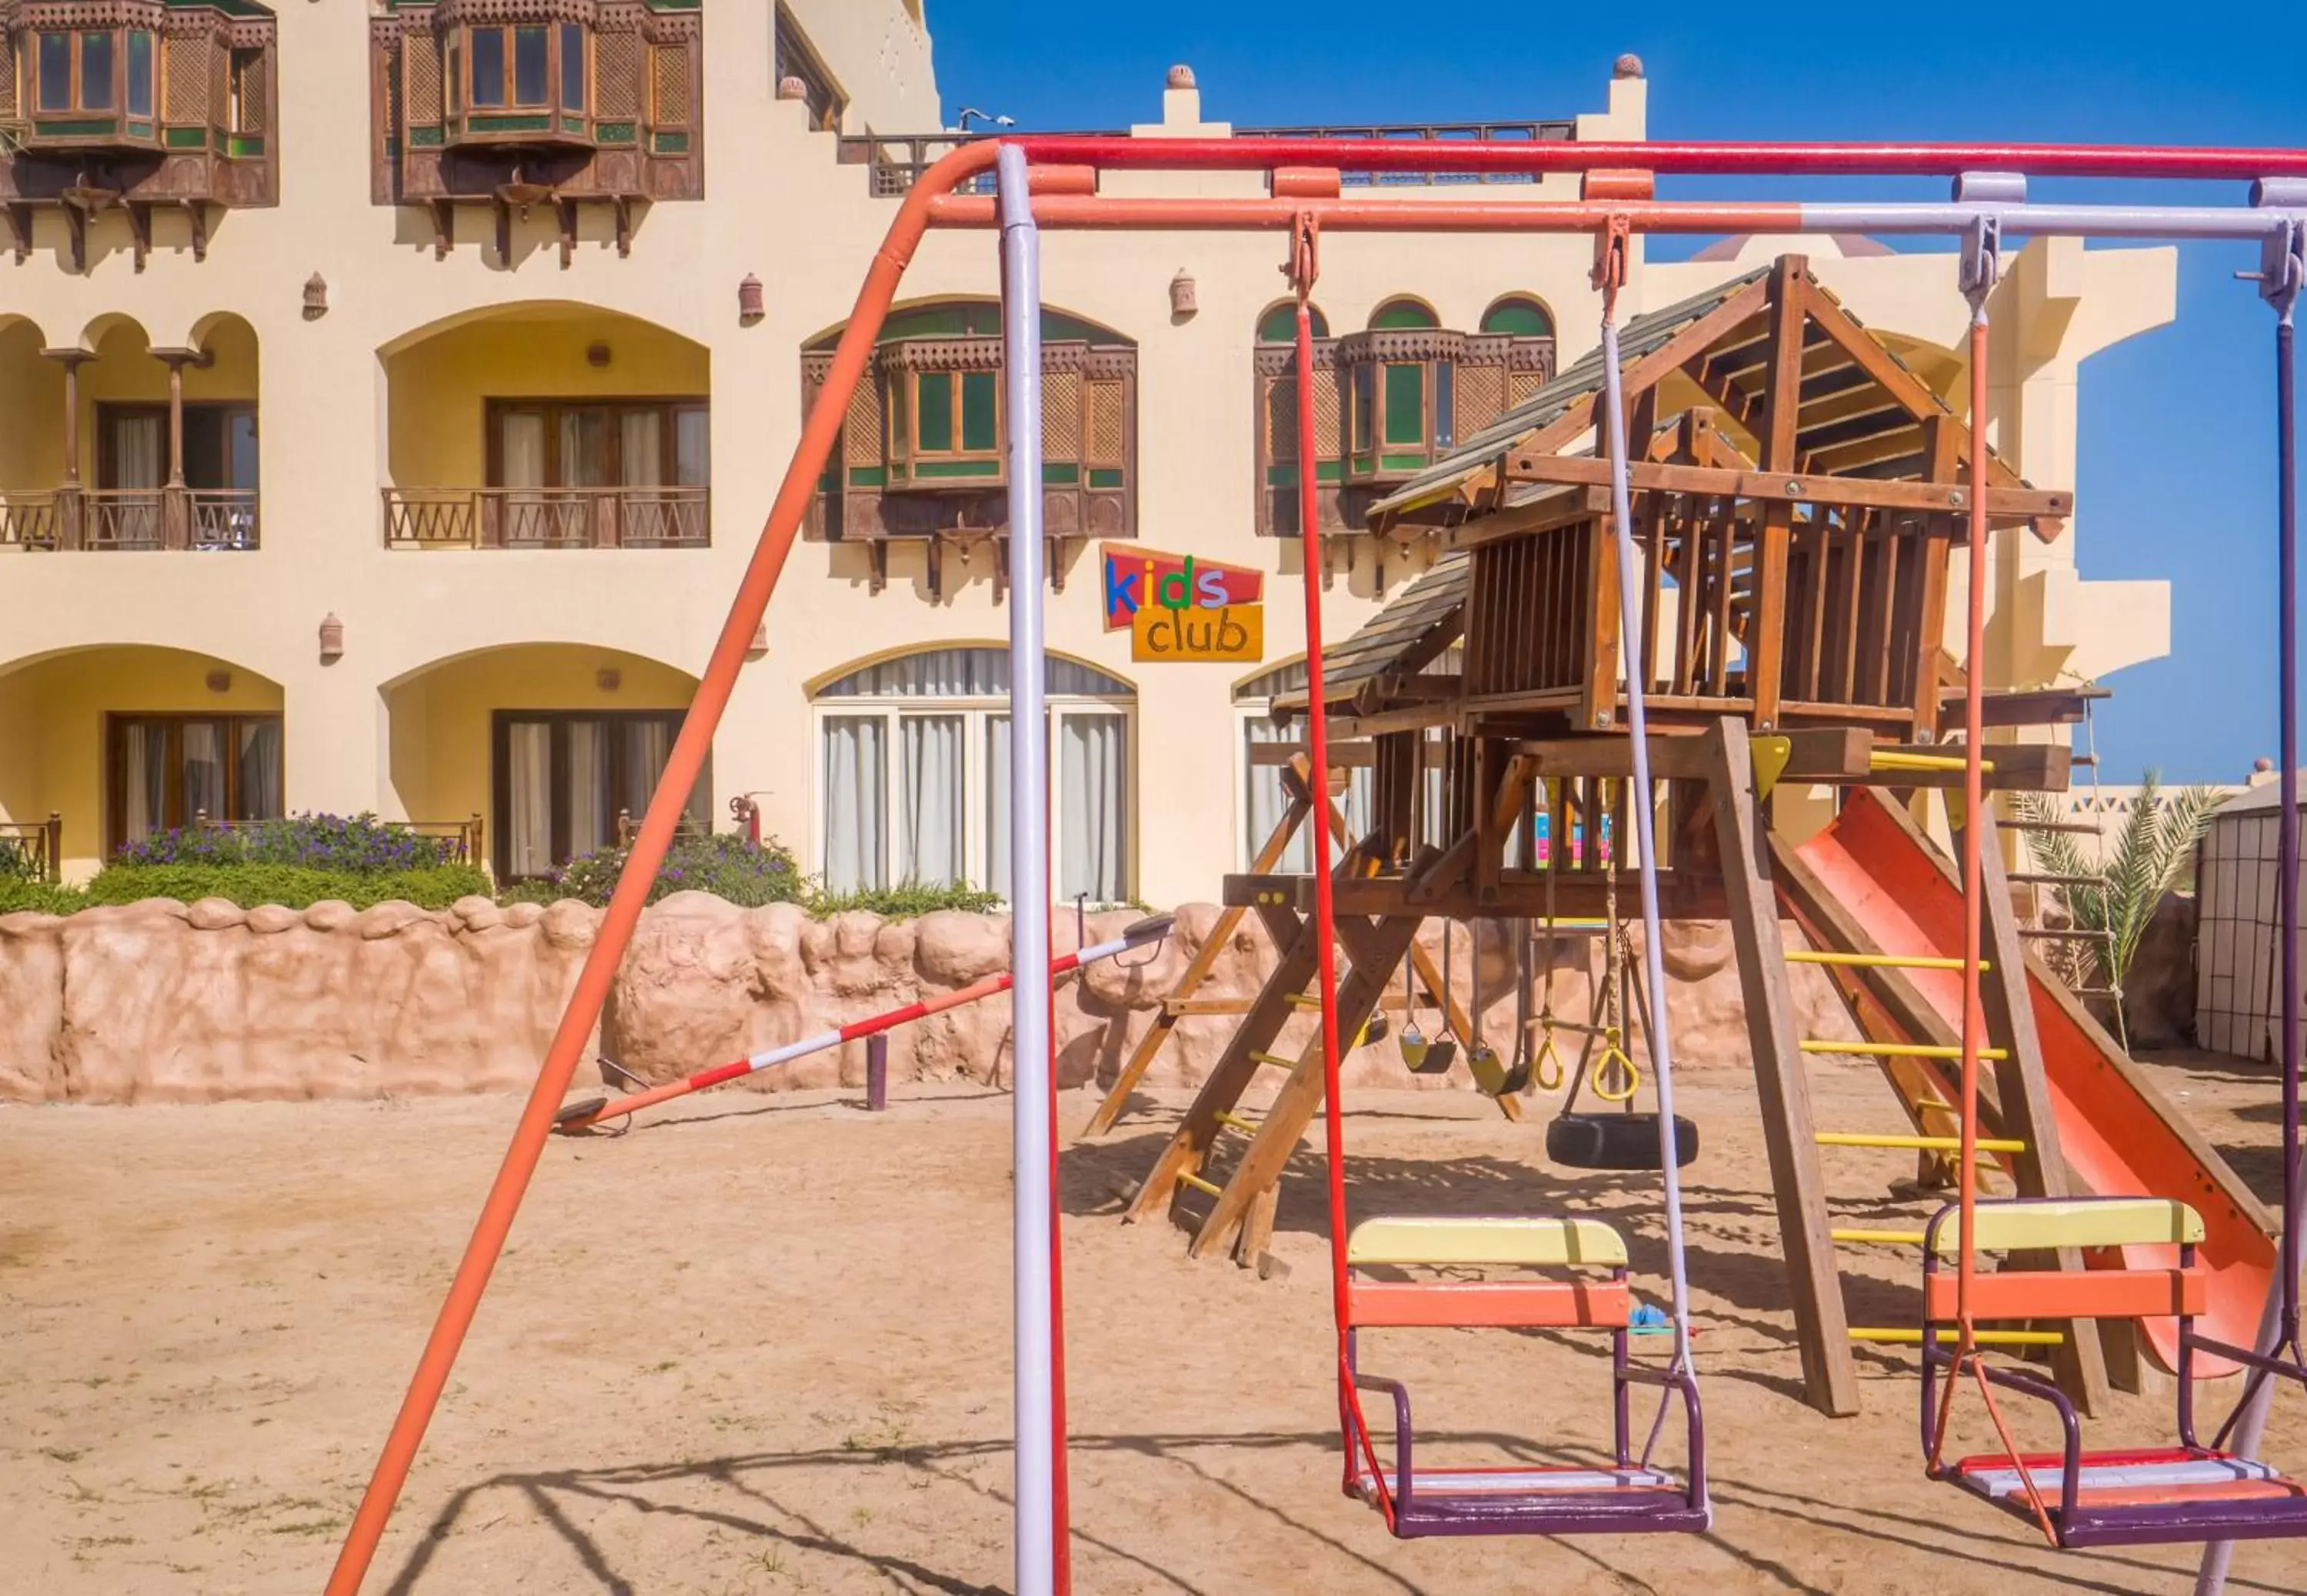 Kids's club, Children's Play Area in Sunny Days Palma De Mirette Resort & Spa